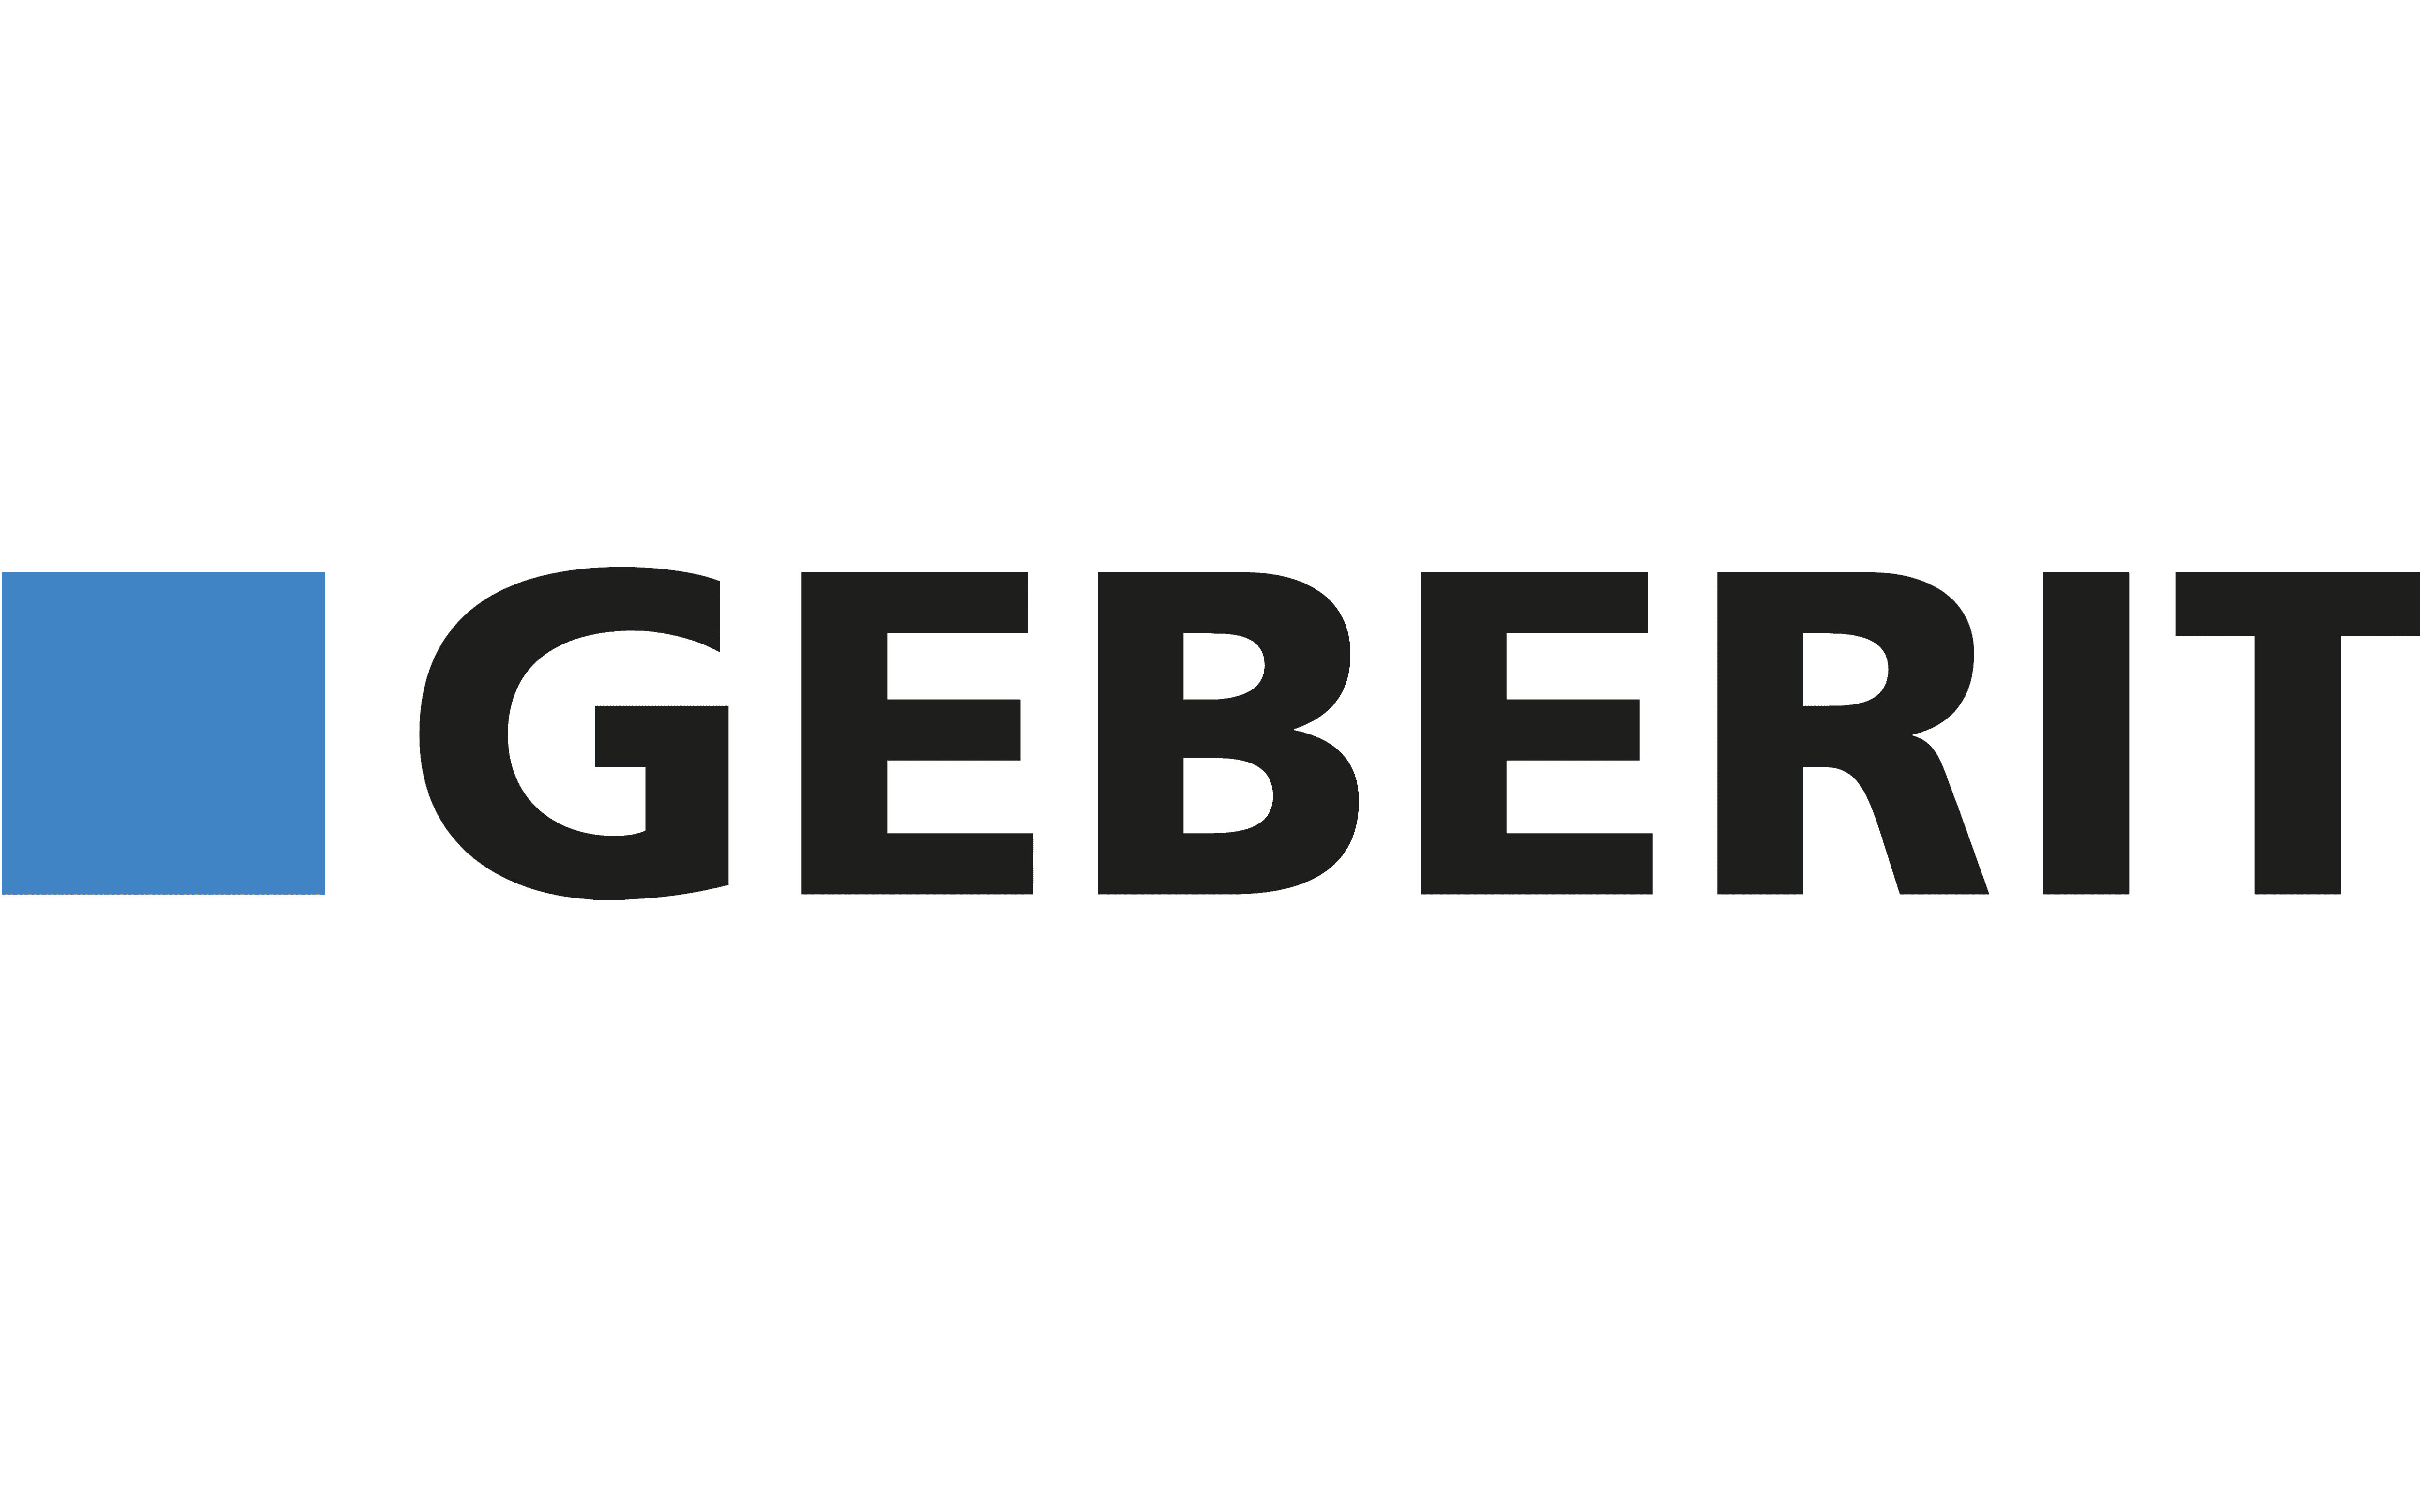 Лейбл киселева. Геберит лого. Лого Геберит сантехника. Geberit логотип. Логотипы брендов сантехники.